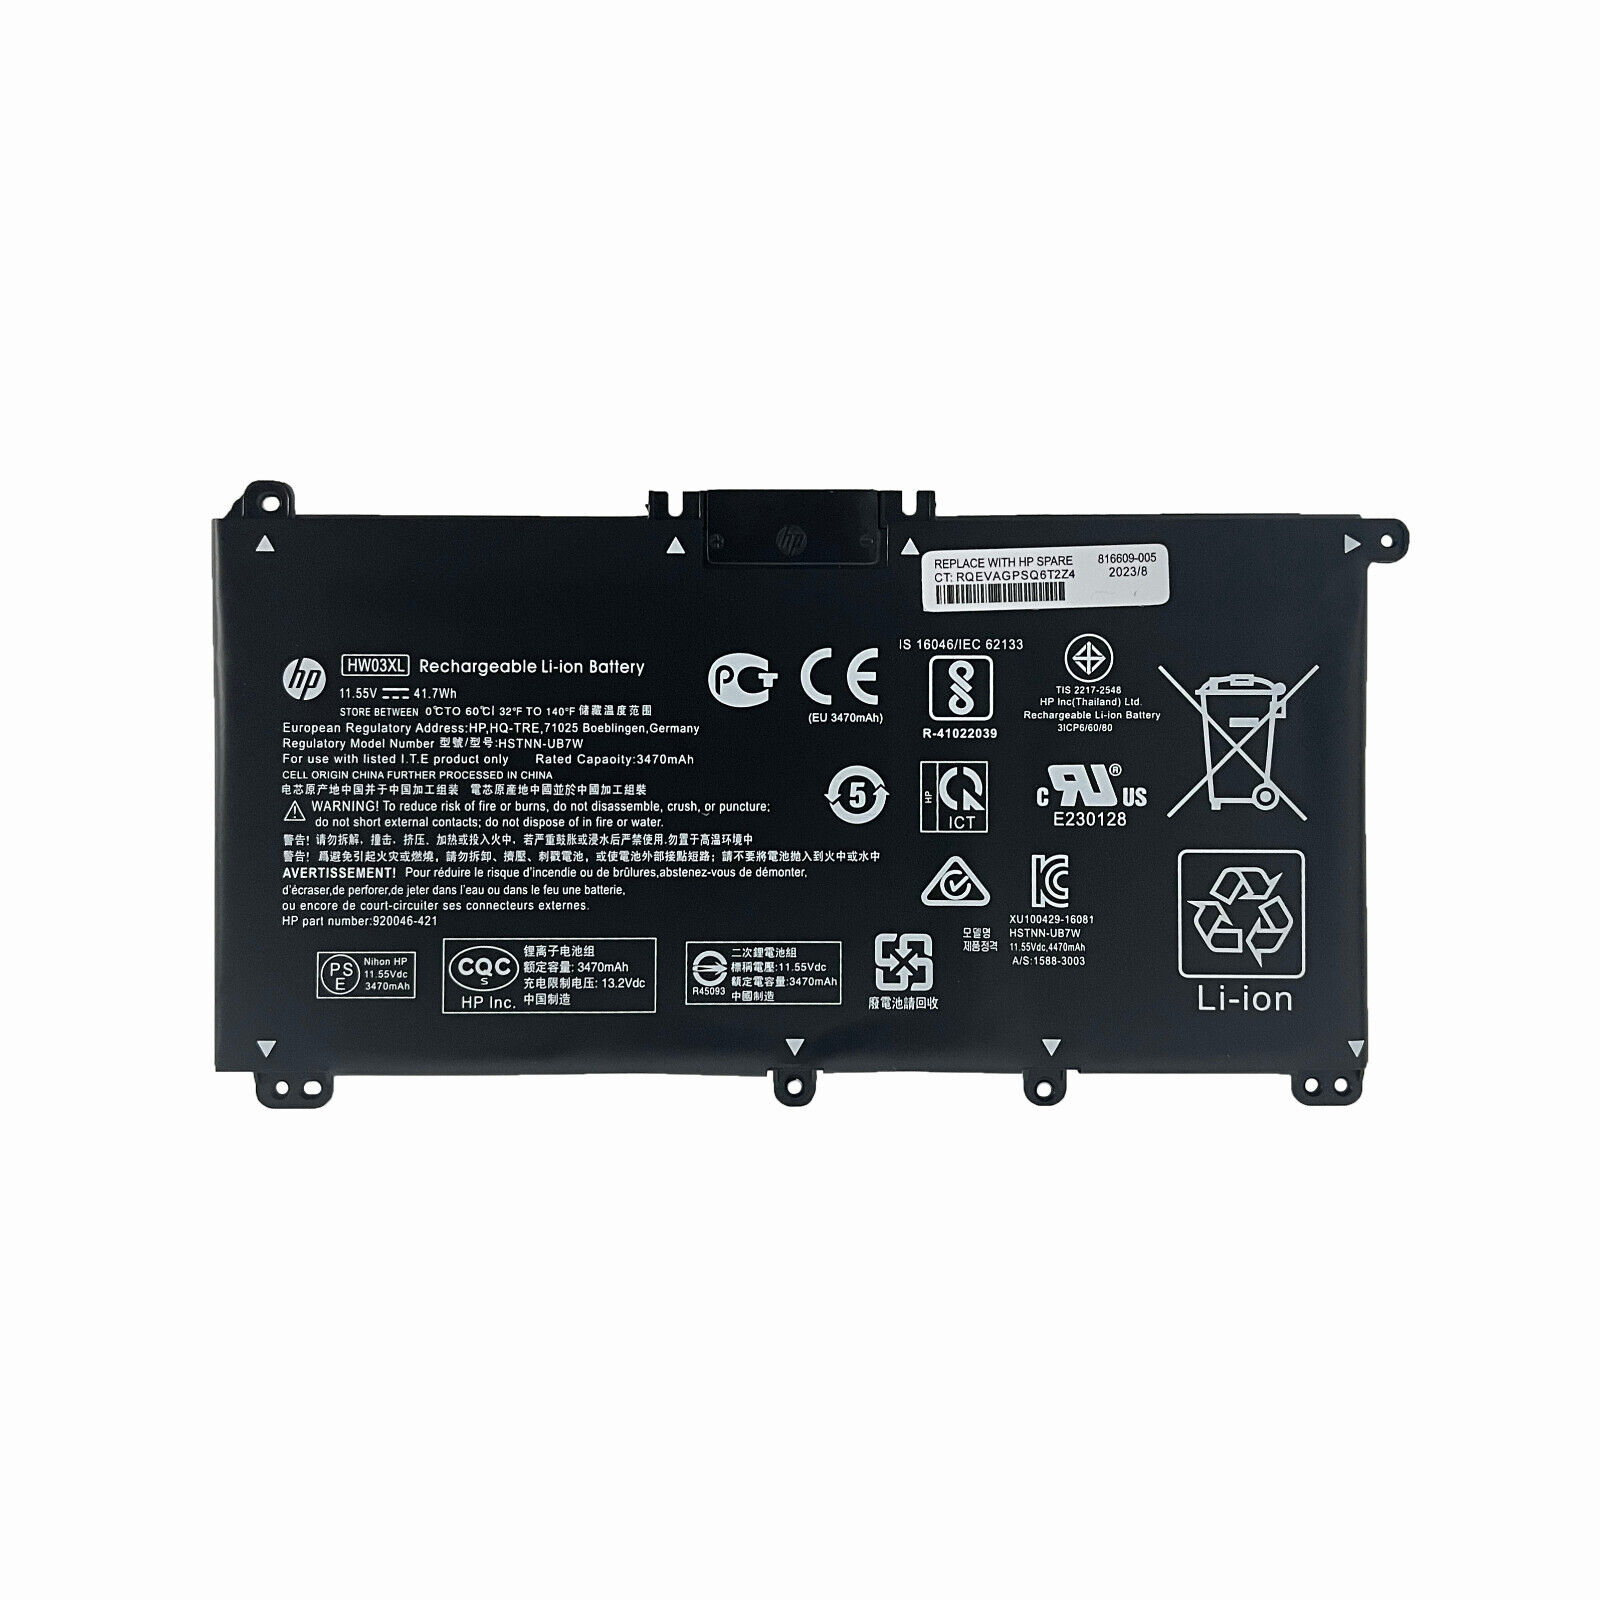 NEW Genuine HW03XL Battery For HP 17-CN 17-CP Pavilion 15-EG 15-EH HSTNN-OB2A